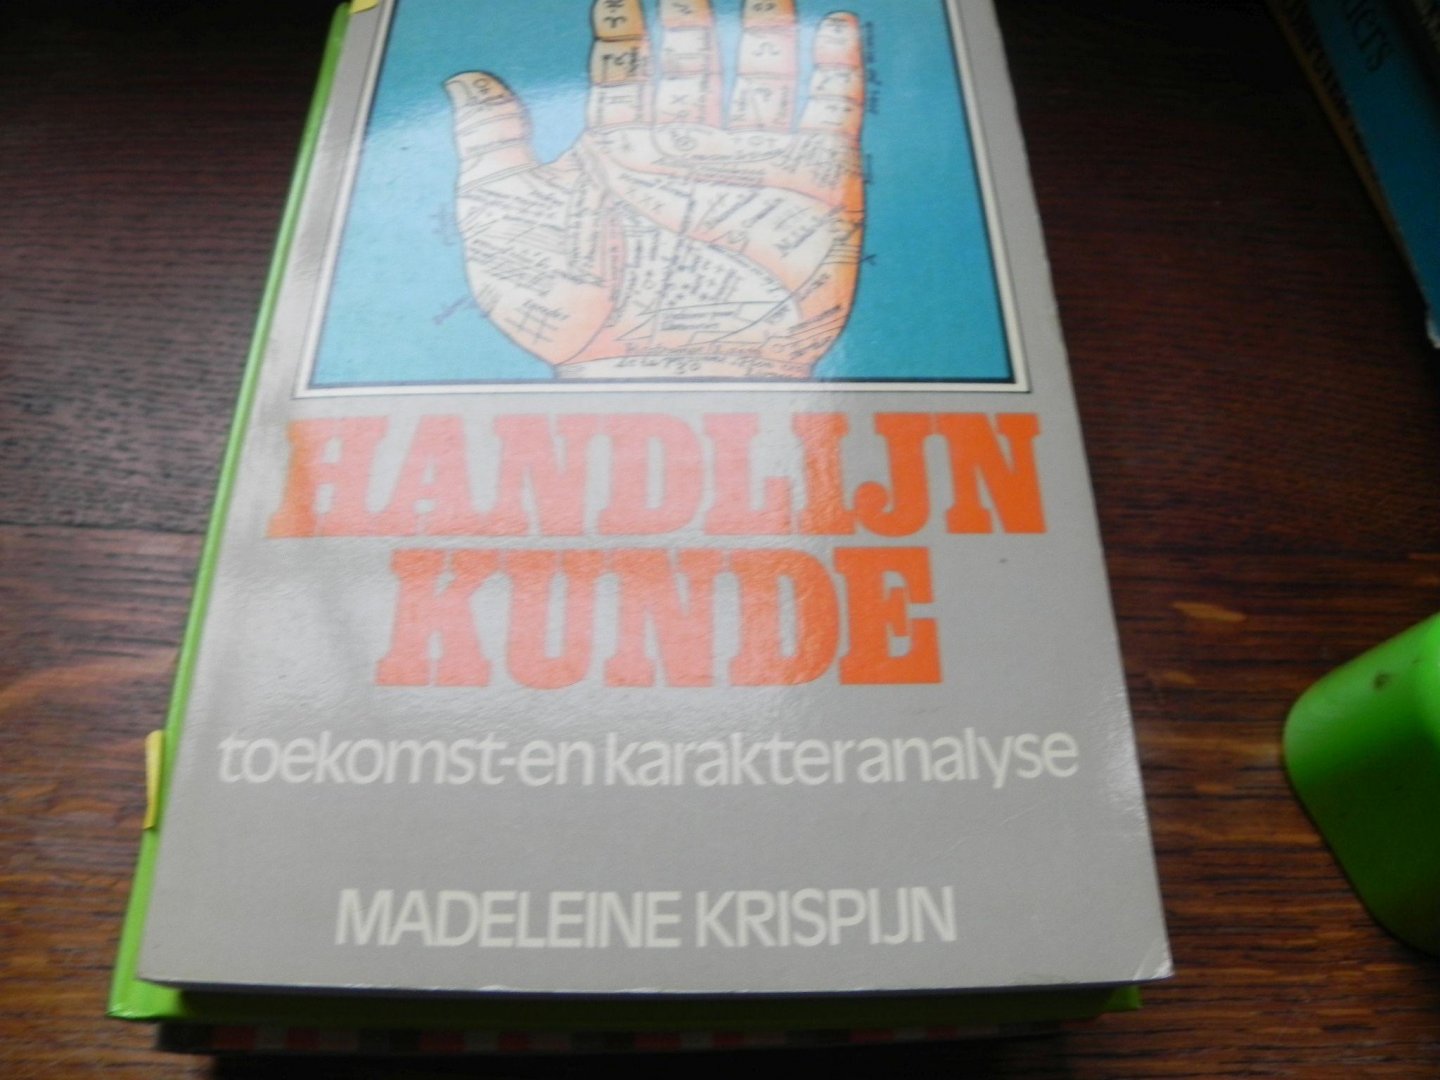 Madeleine Krispijn - Handlijnkunde